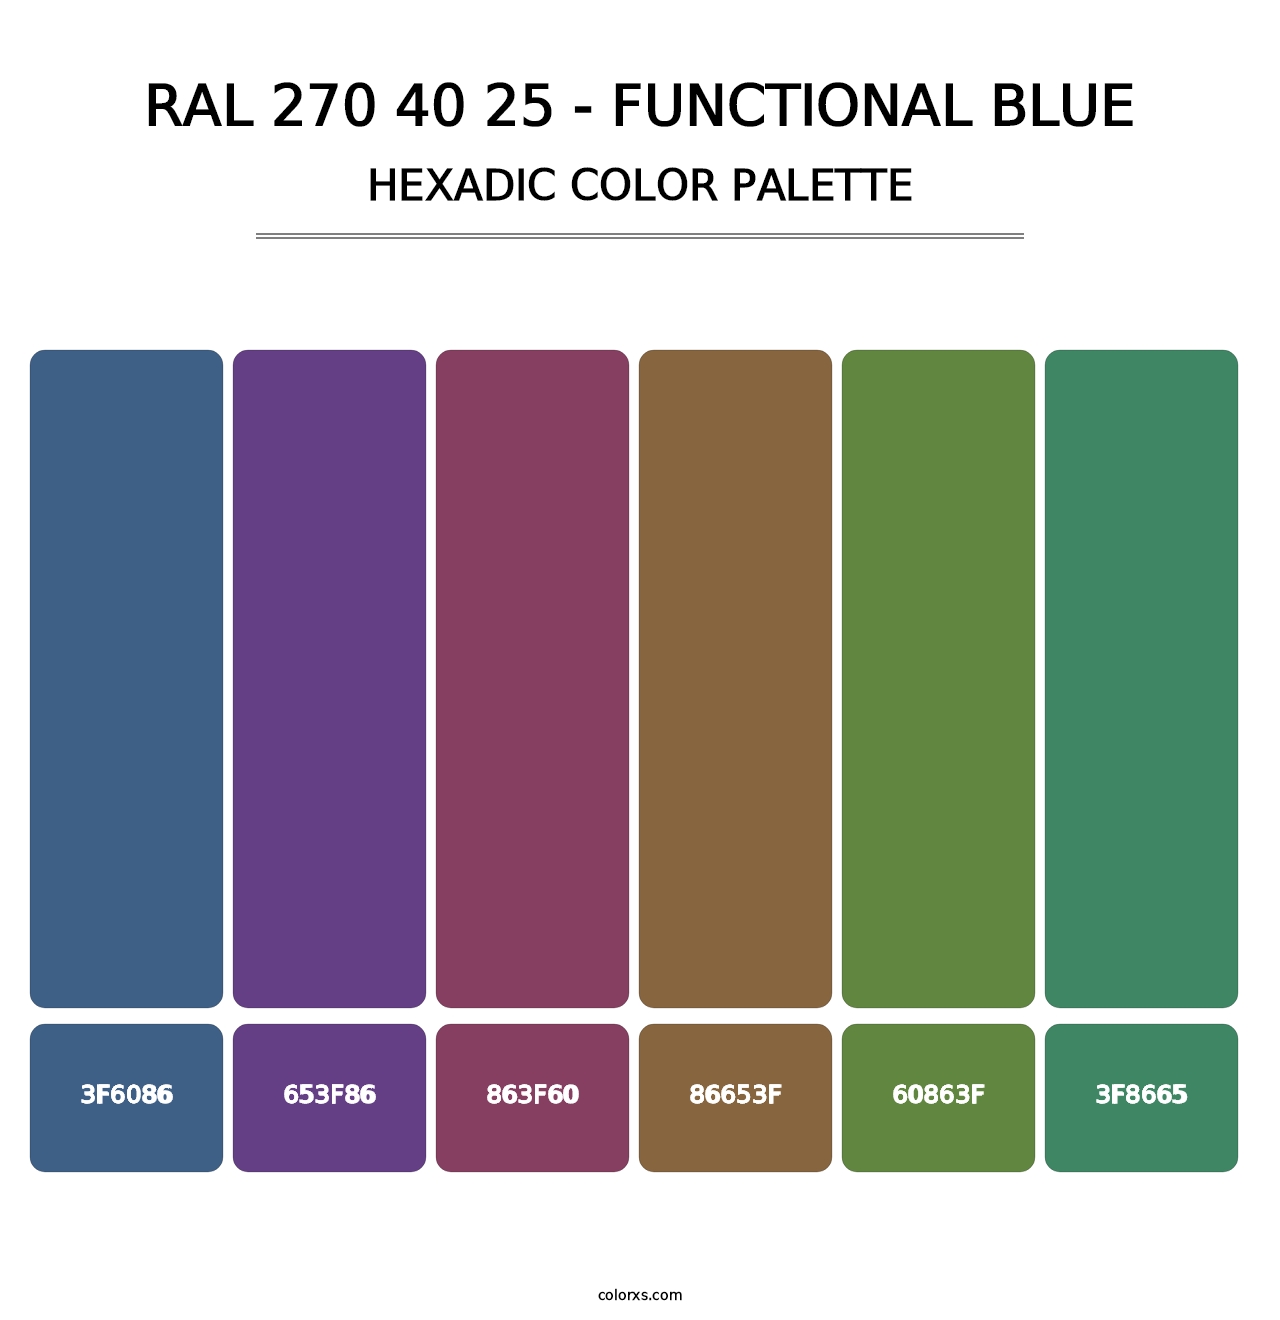 RAL 270 40 25 - Functional Blue - Hexadic Color Palette